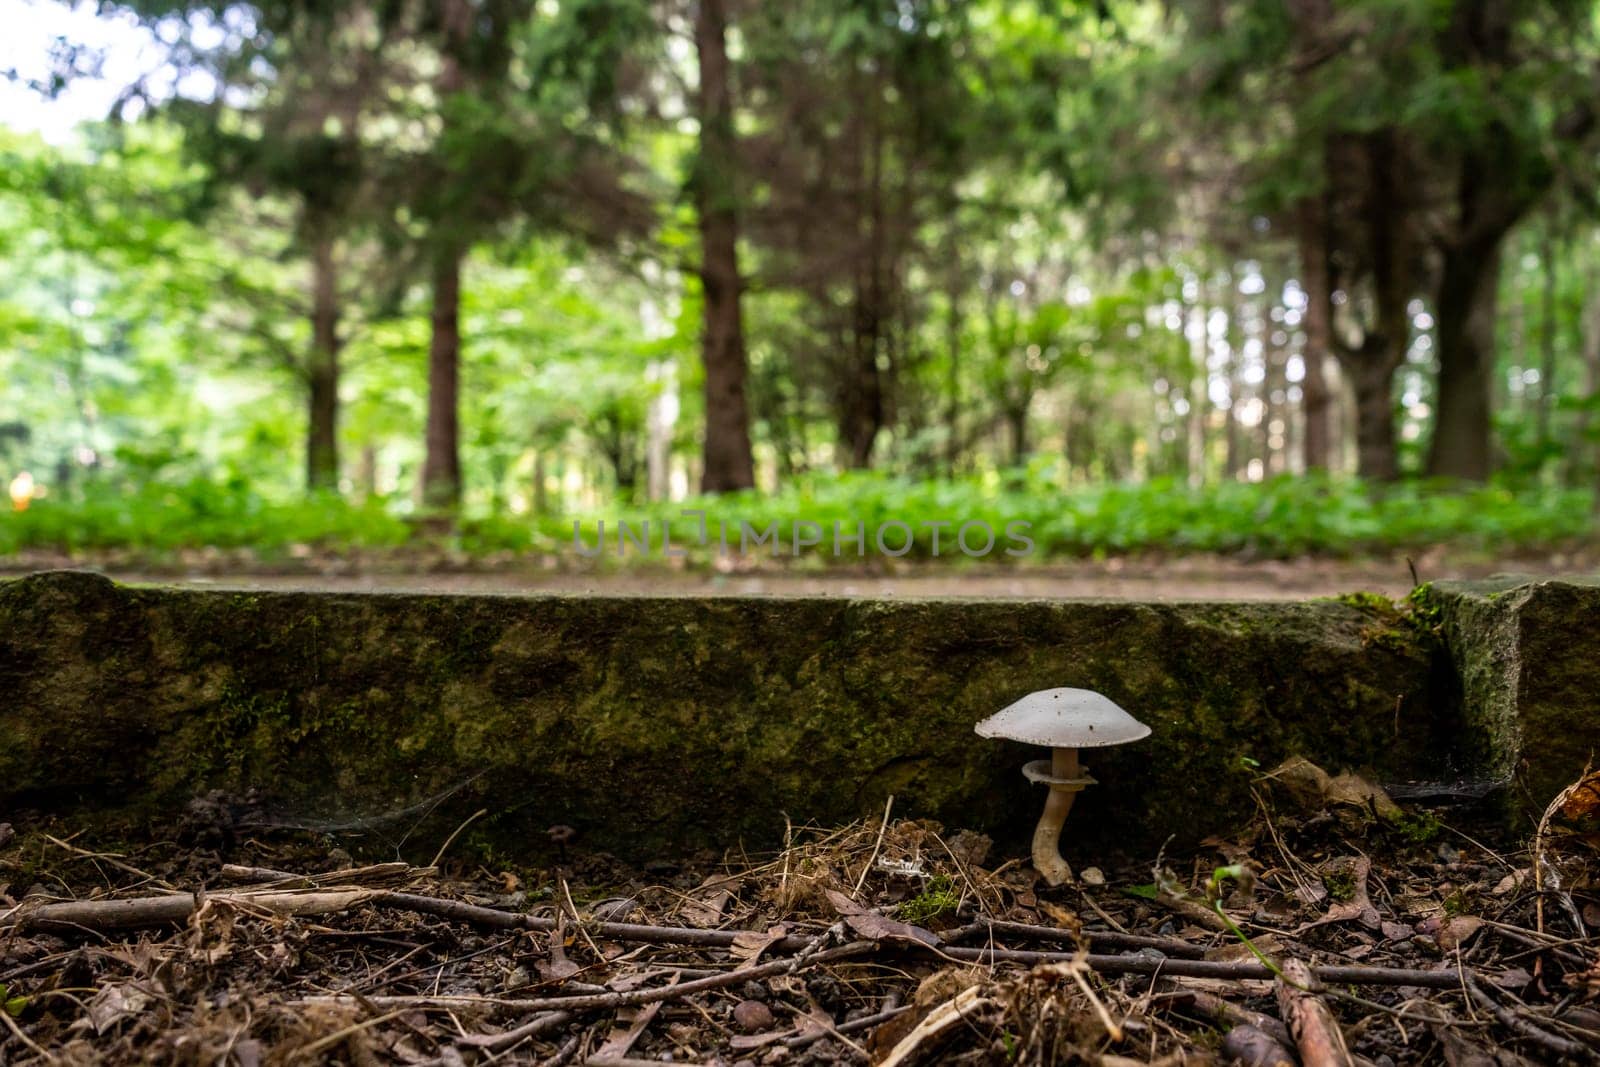 A mushroom grows near the curb in the park by Serhii_Voroshchuk